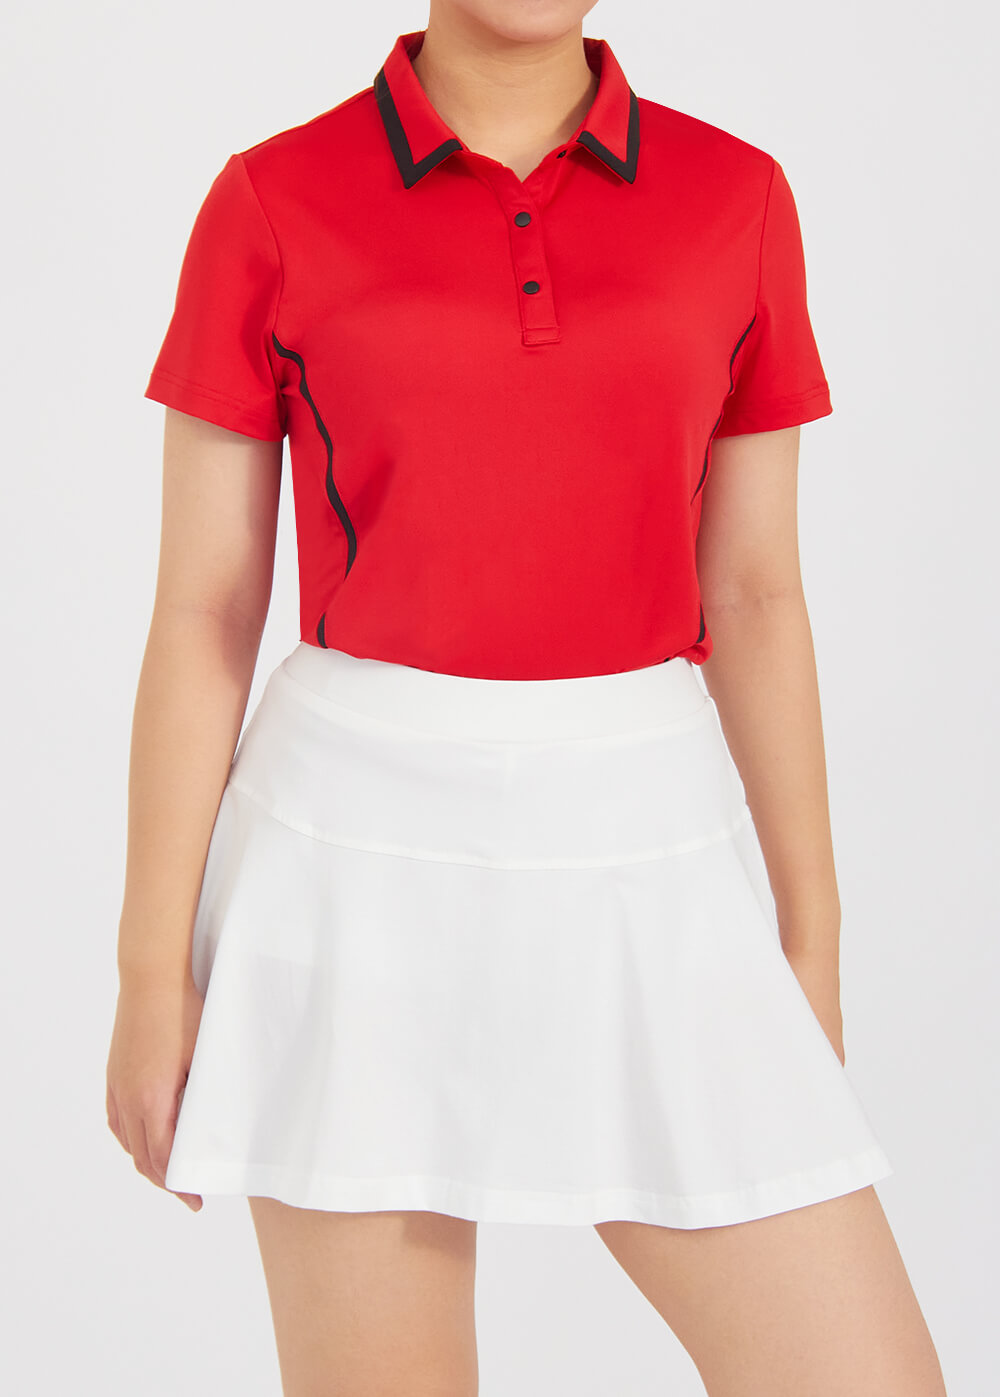 Custom Ladies Active Wear Fashion Short Sleeve Tennis Polo Shirts Golf Skirt